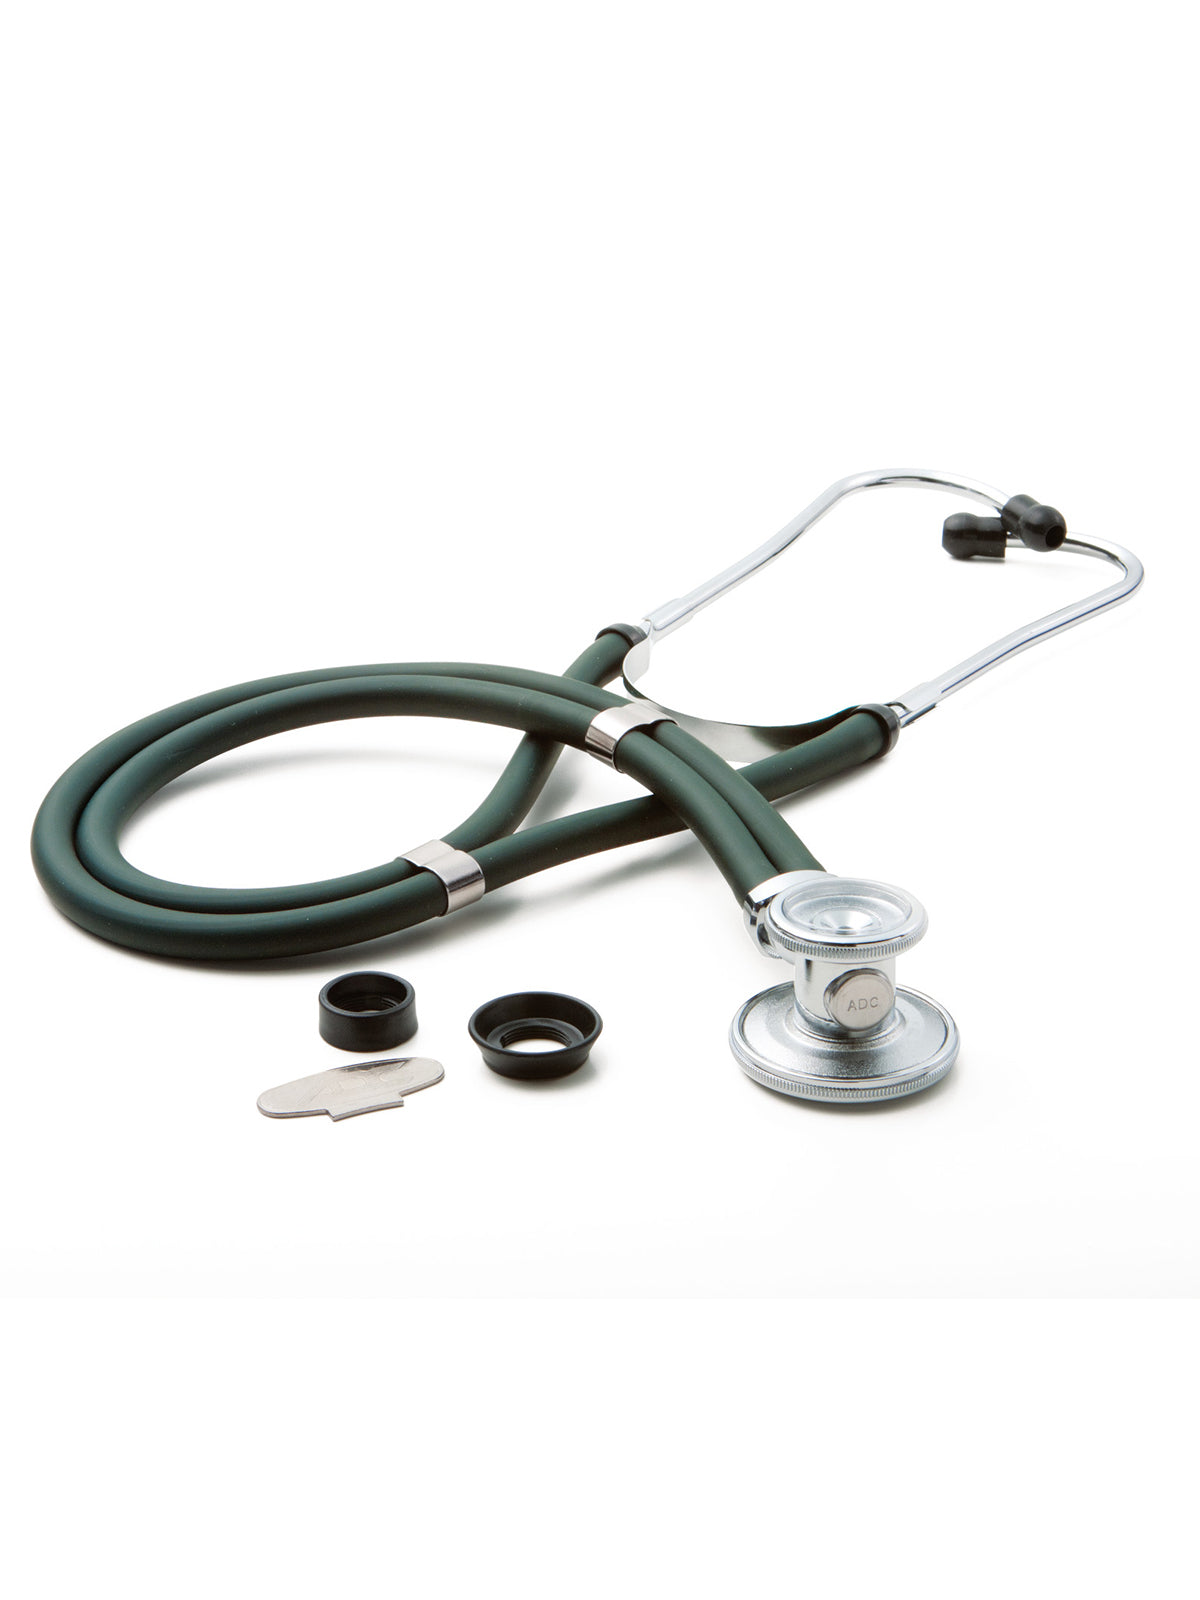 Critical Care / Cardiology Stethoscope - AD641Q - Dark Green